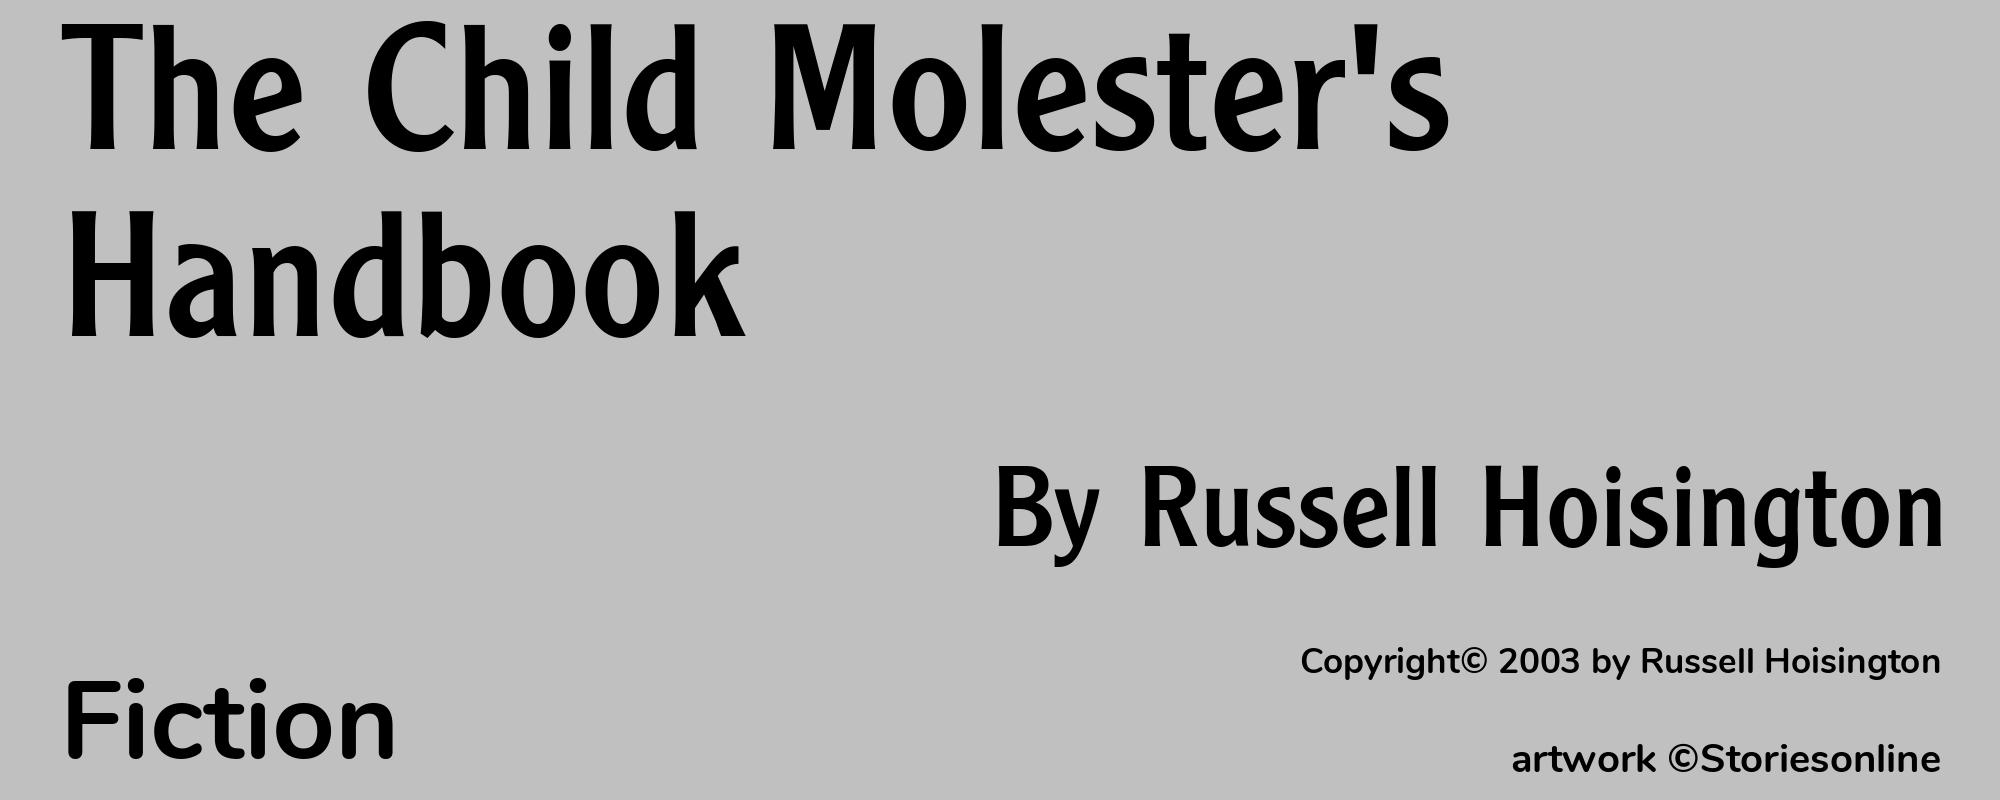 The Child Molester's Handbook - Cover